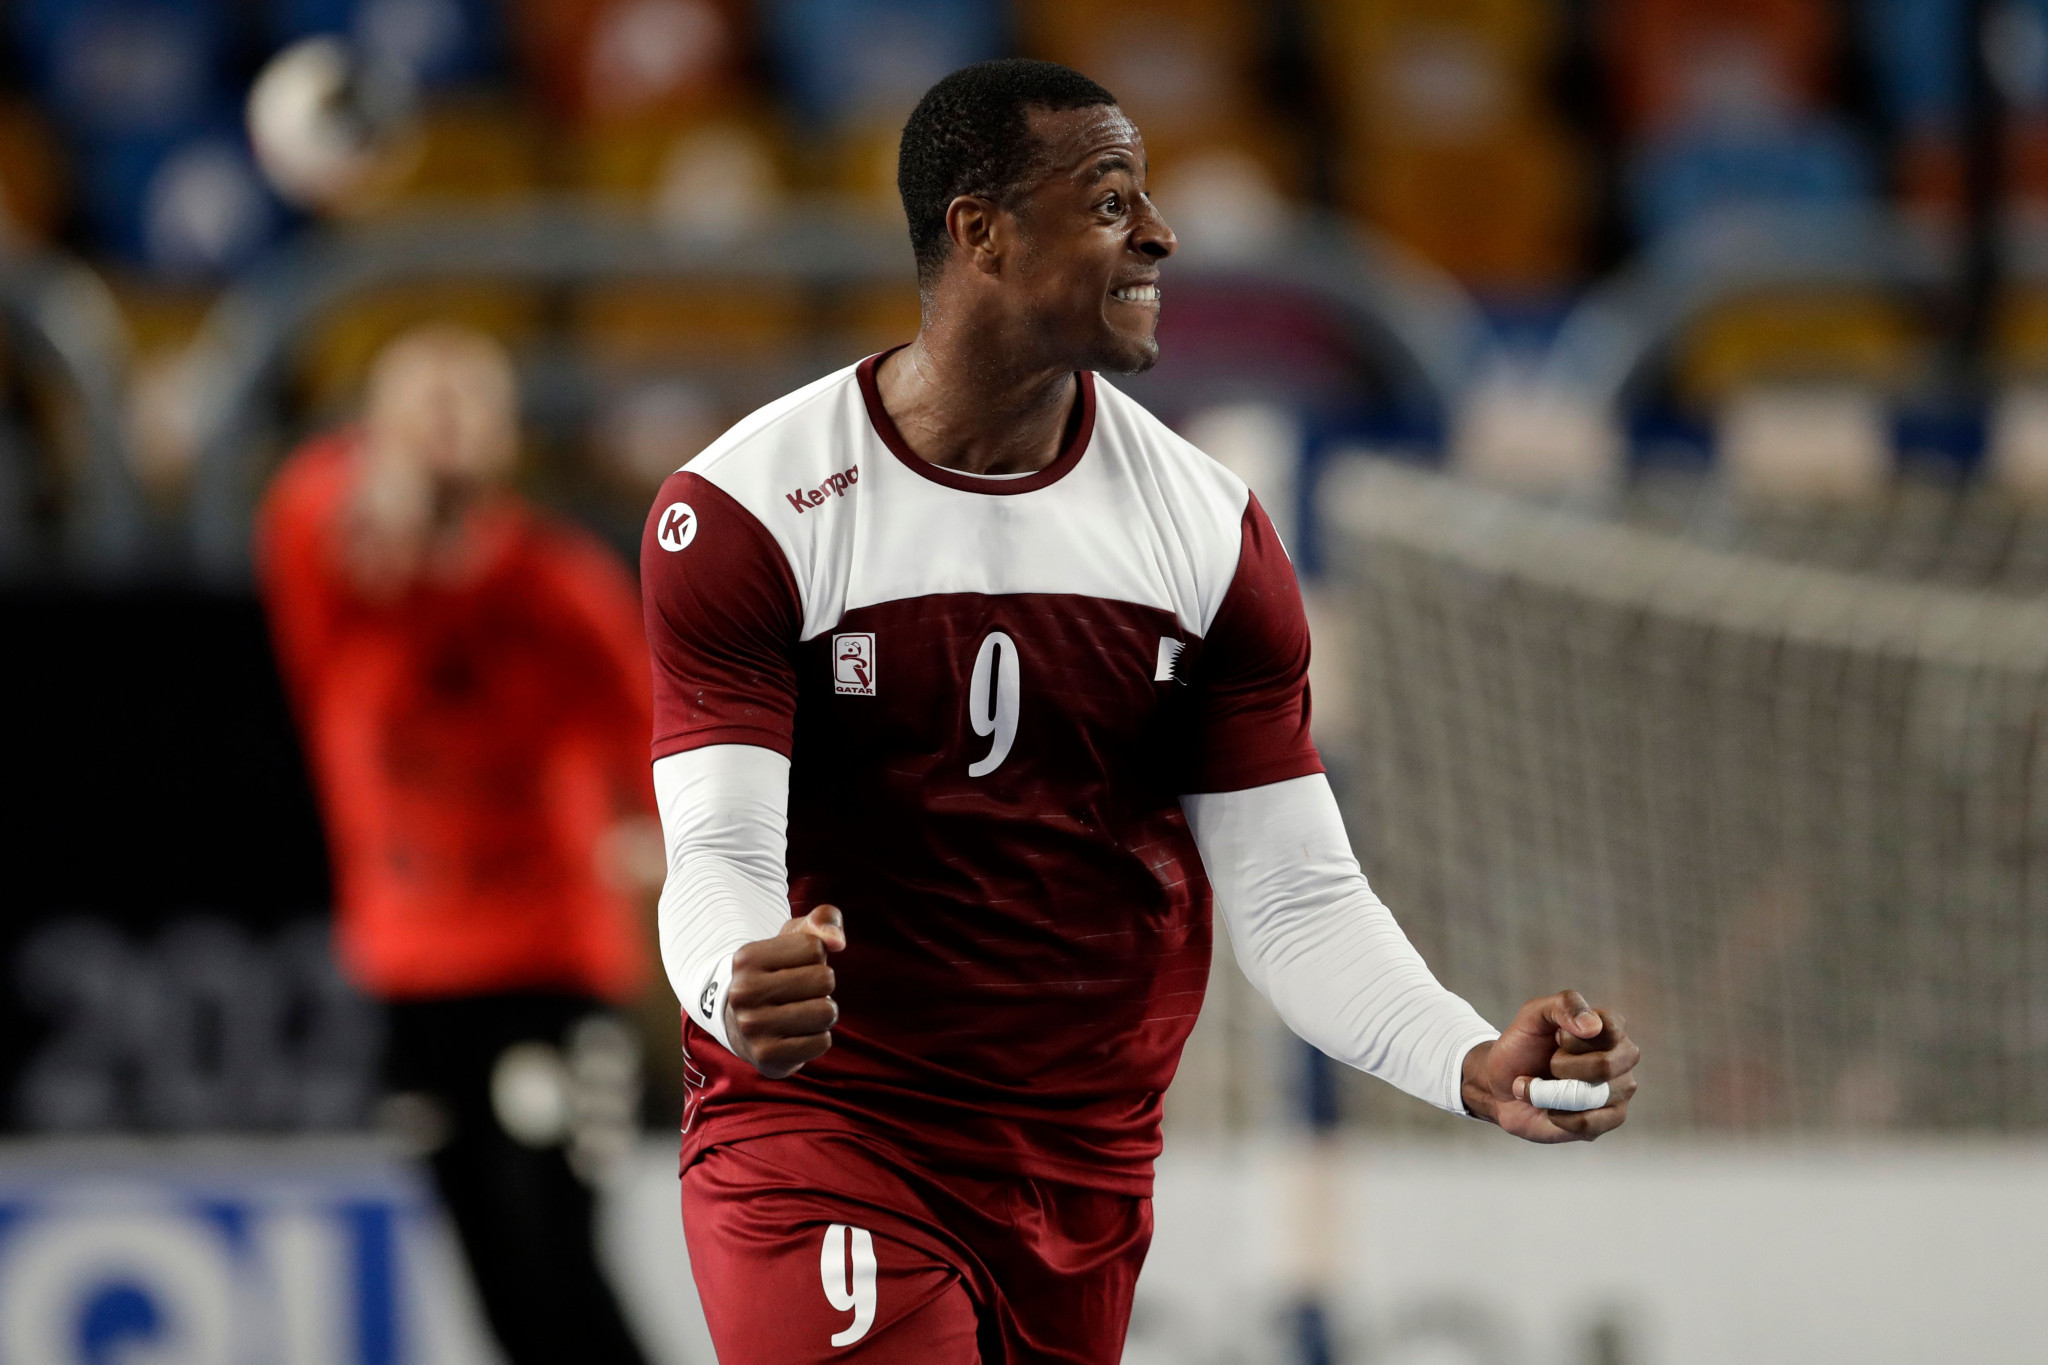 Qatar and Bahrain to meet in Asian Men's Handball Championship final